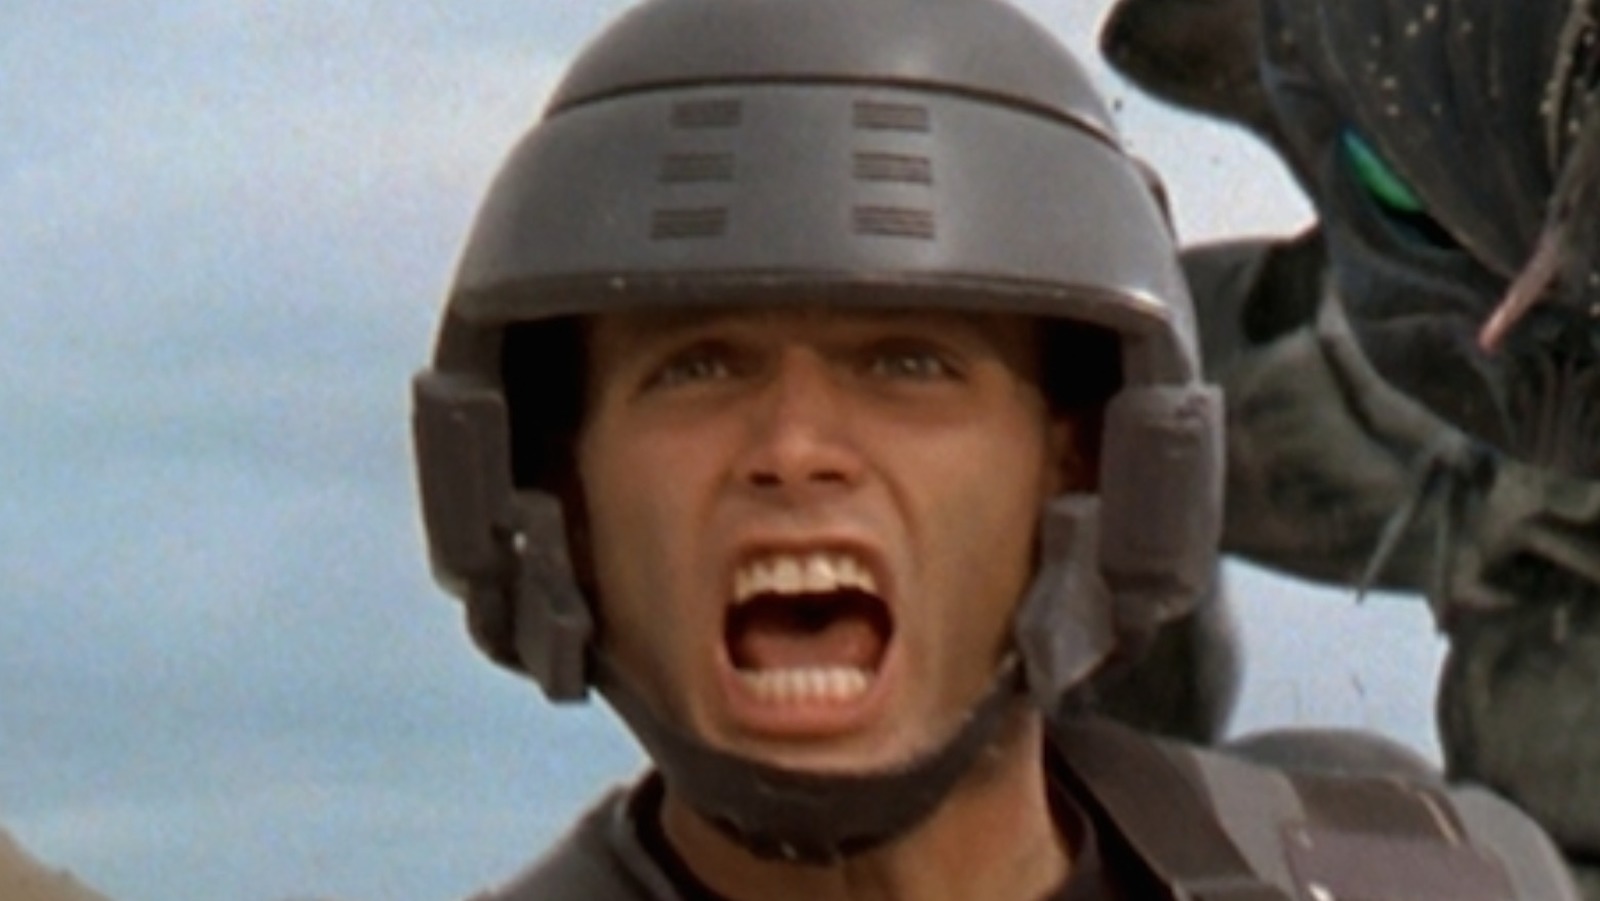 Bichos Battle Scene Film: Starship Troopers (USA 1997) Director